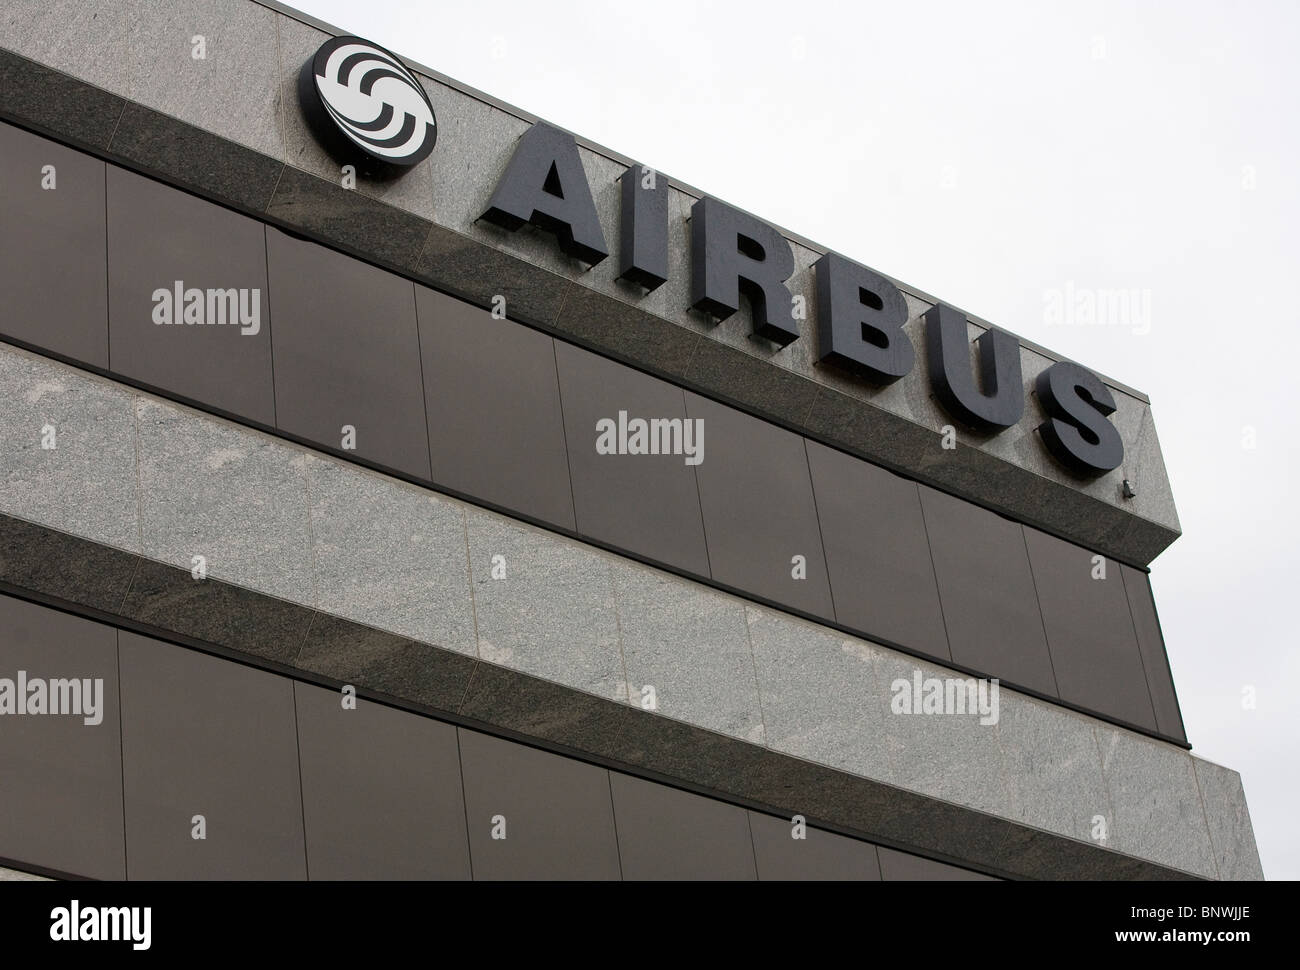 Airbus Banque D'Images